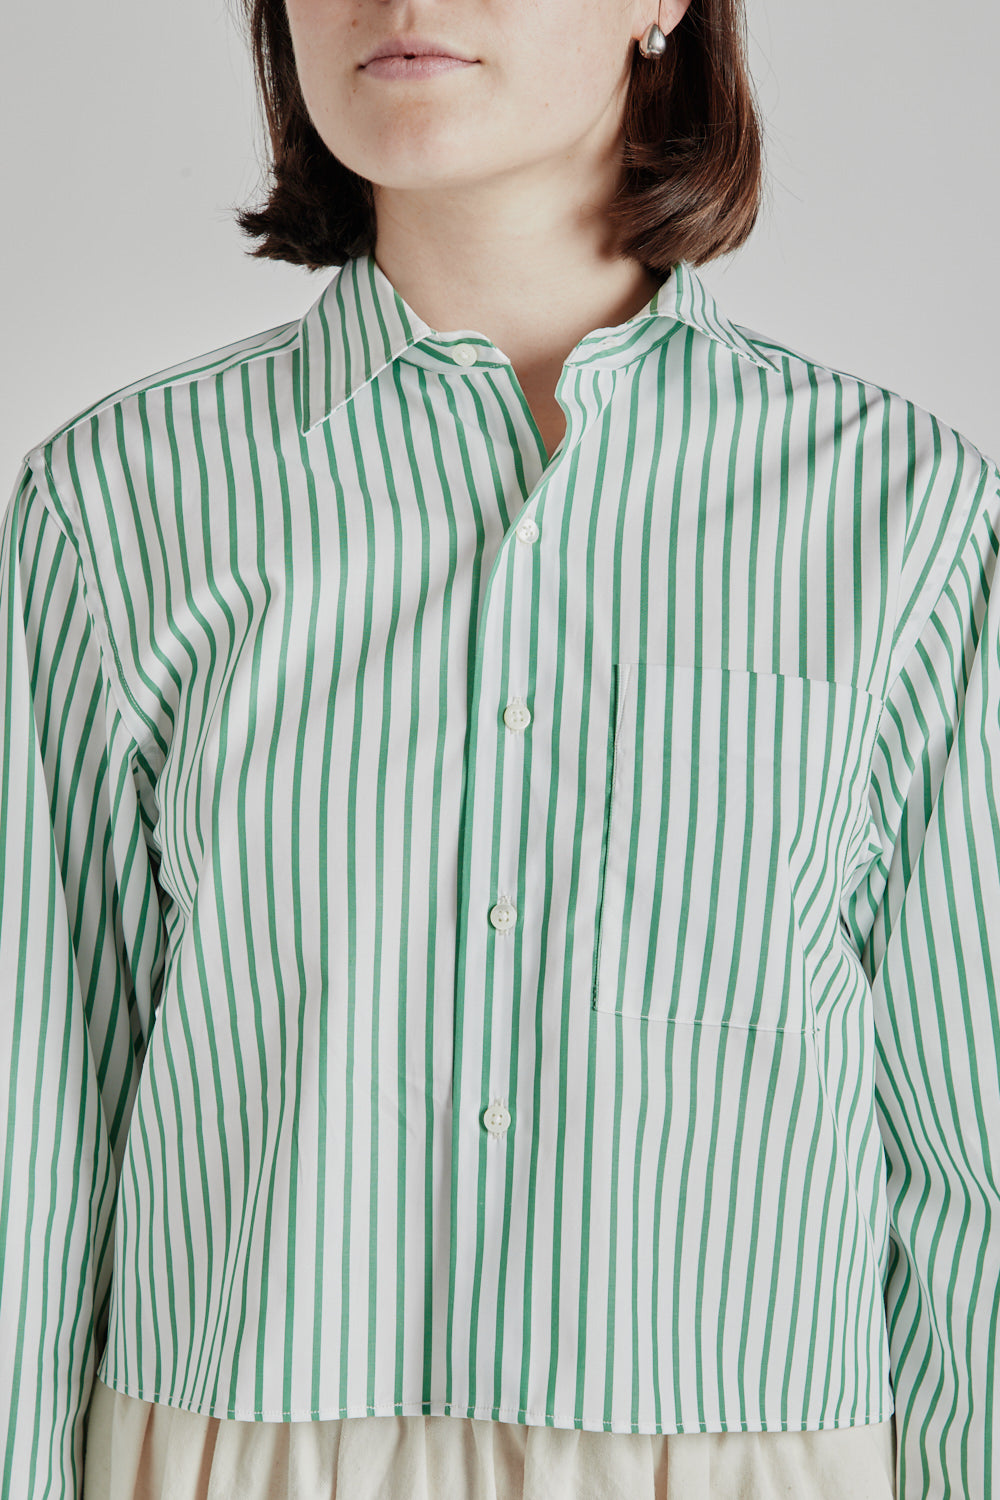 Blurhms Stripe Short Shirt in Ivory/Green